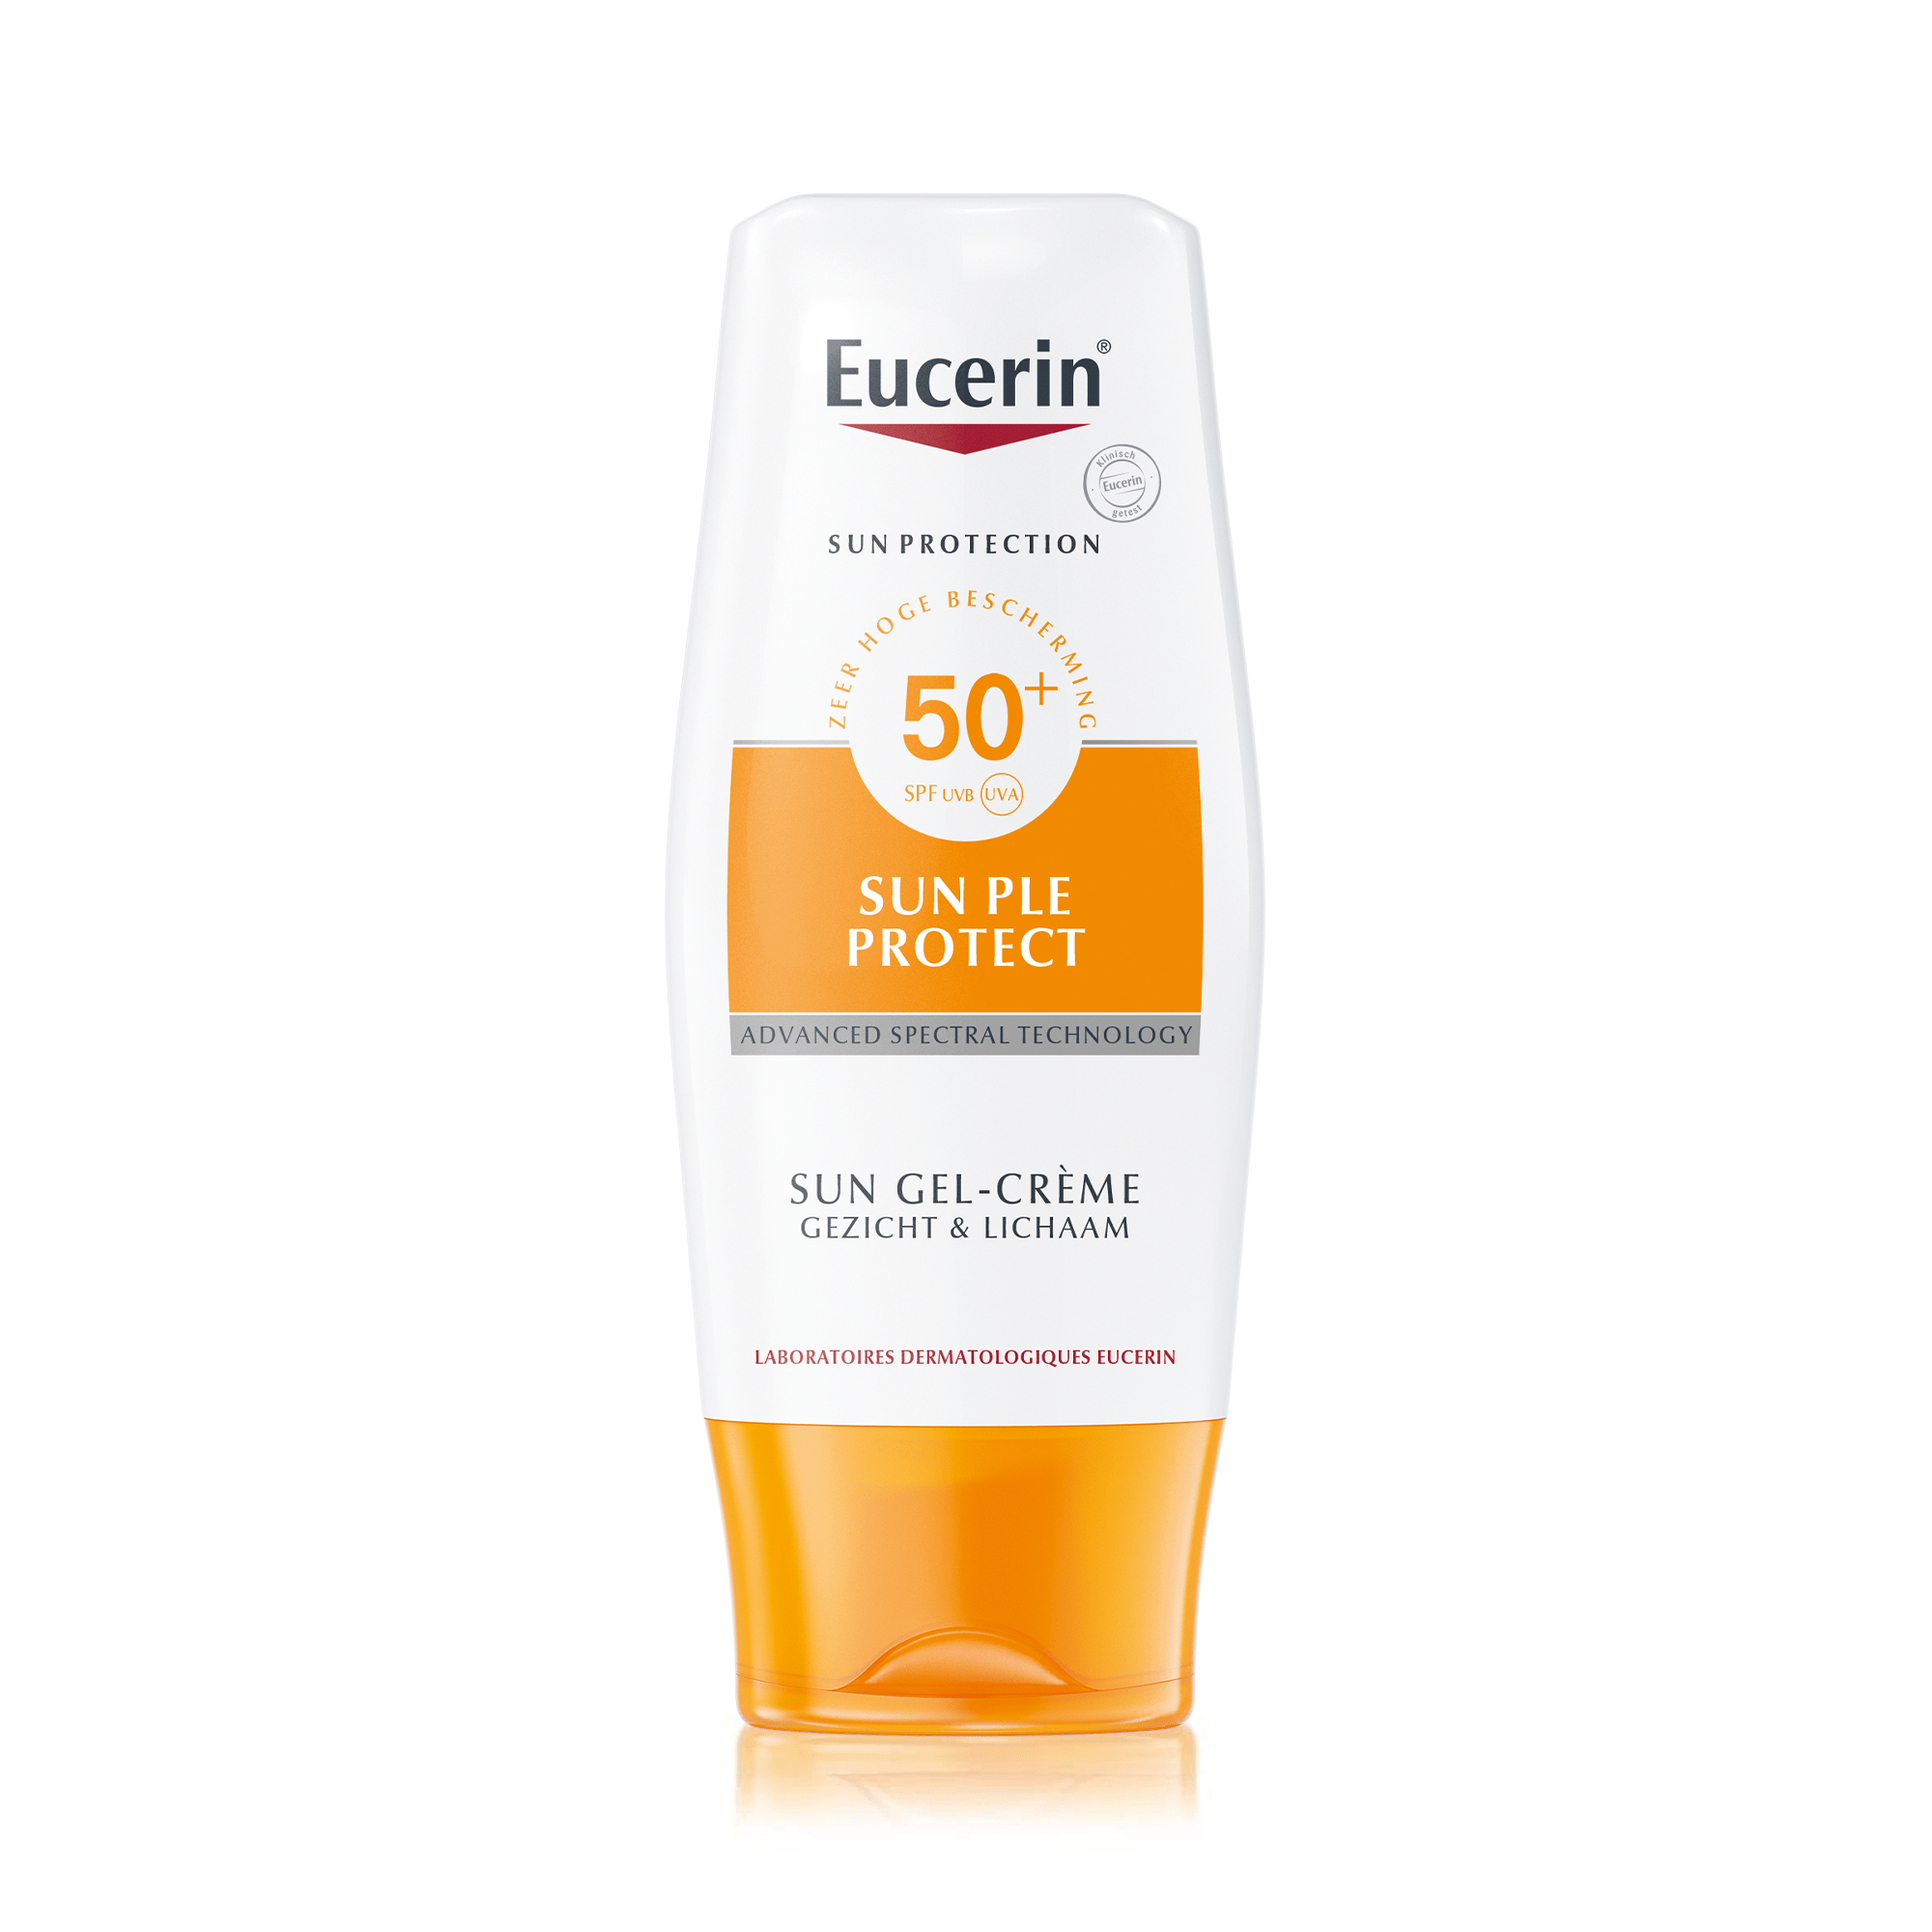 Sun Gel-Crème PLE Protect SPF 50+